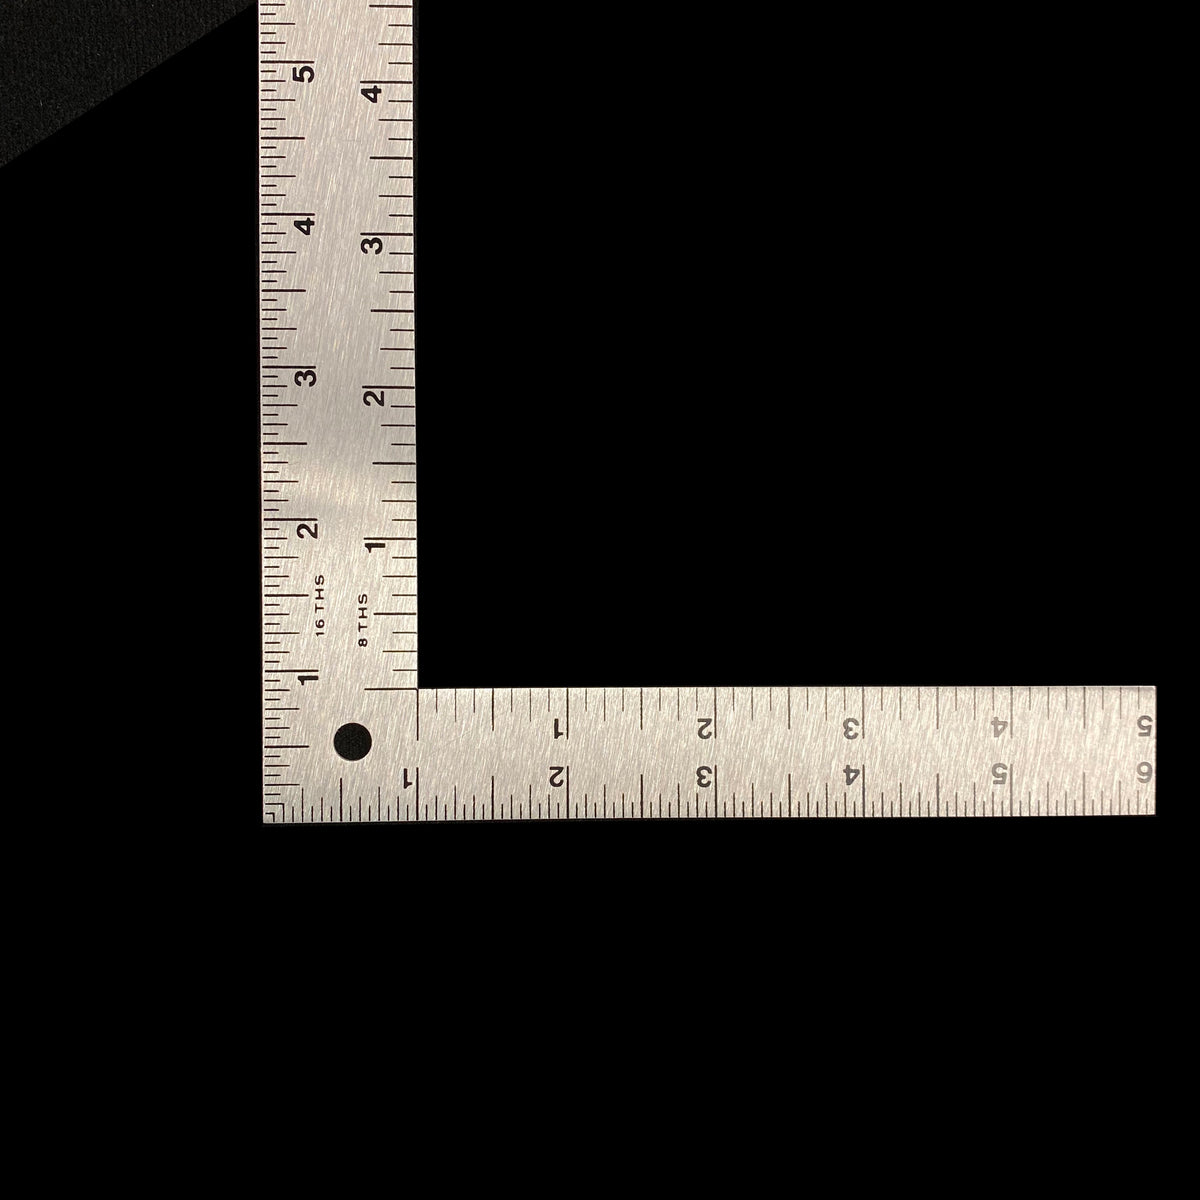 Fairgate 12 X 6 Half-size L-square Ruler 50-147 Made in USA 